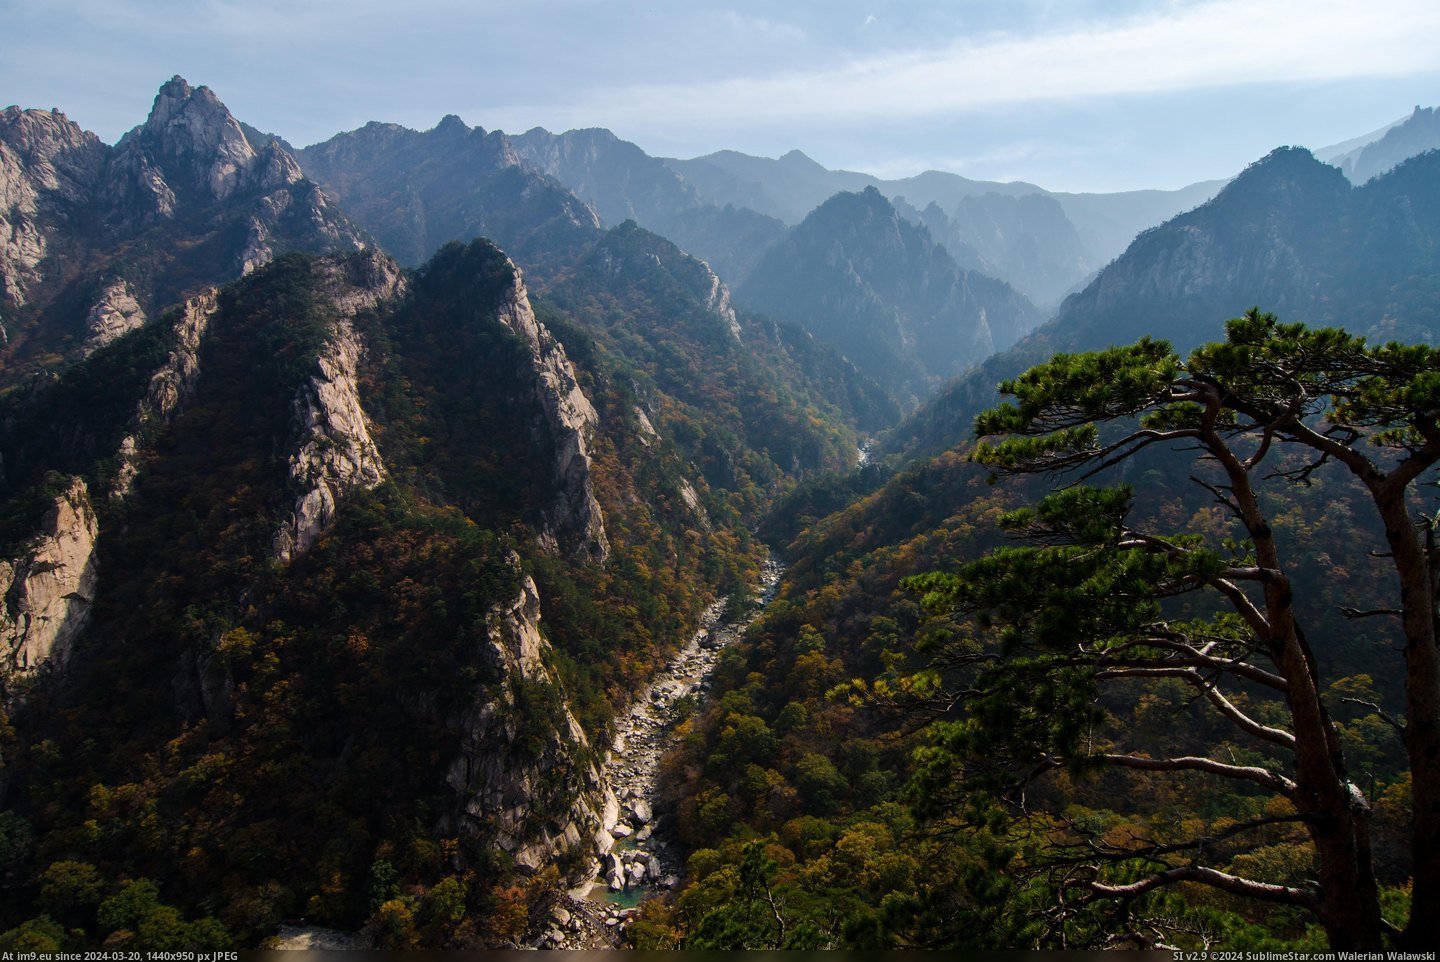 #Park #National #Korea #Foliage #Seoraksan #South #Peak [Earthporn] Seoraksan National Park (설악산국립공원), South Korea, during peak foliage. (4928*3264) [OC] Pic. (Image of album My r/EARTHPORN favs))